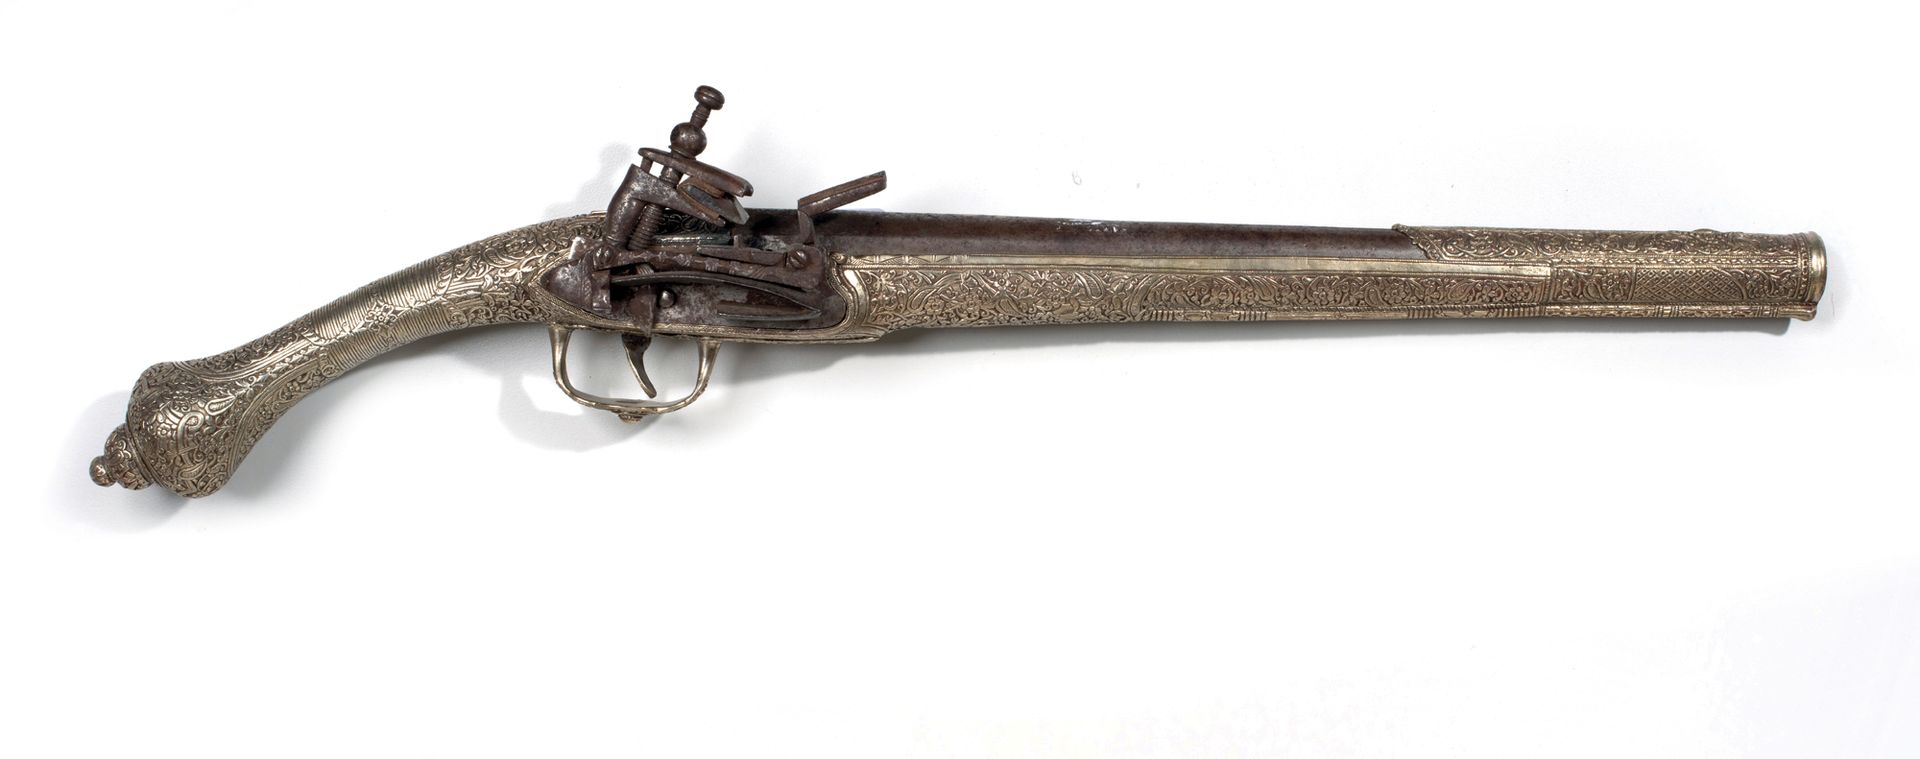 Null Pistolet Ottoman
Balkans, circa 1800, Empire Ottoman Longueur : 54 cm
La cr&hellip;